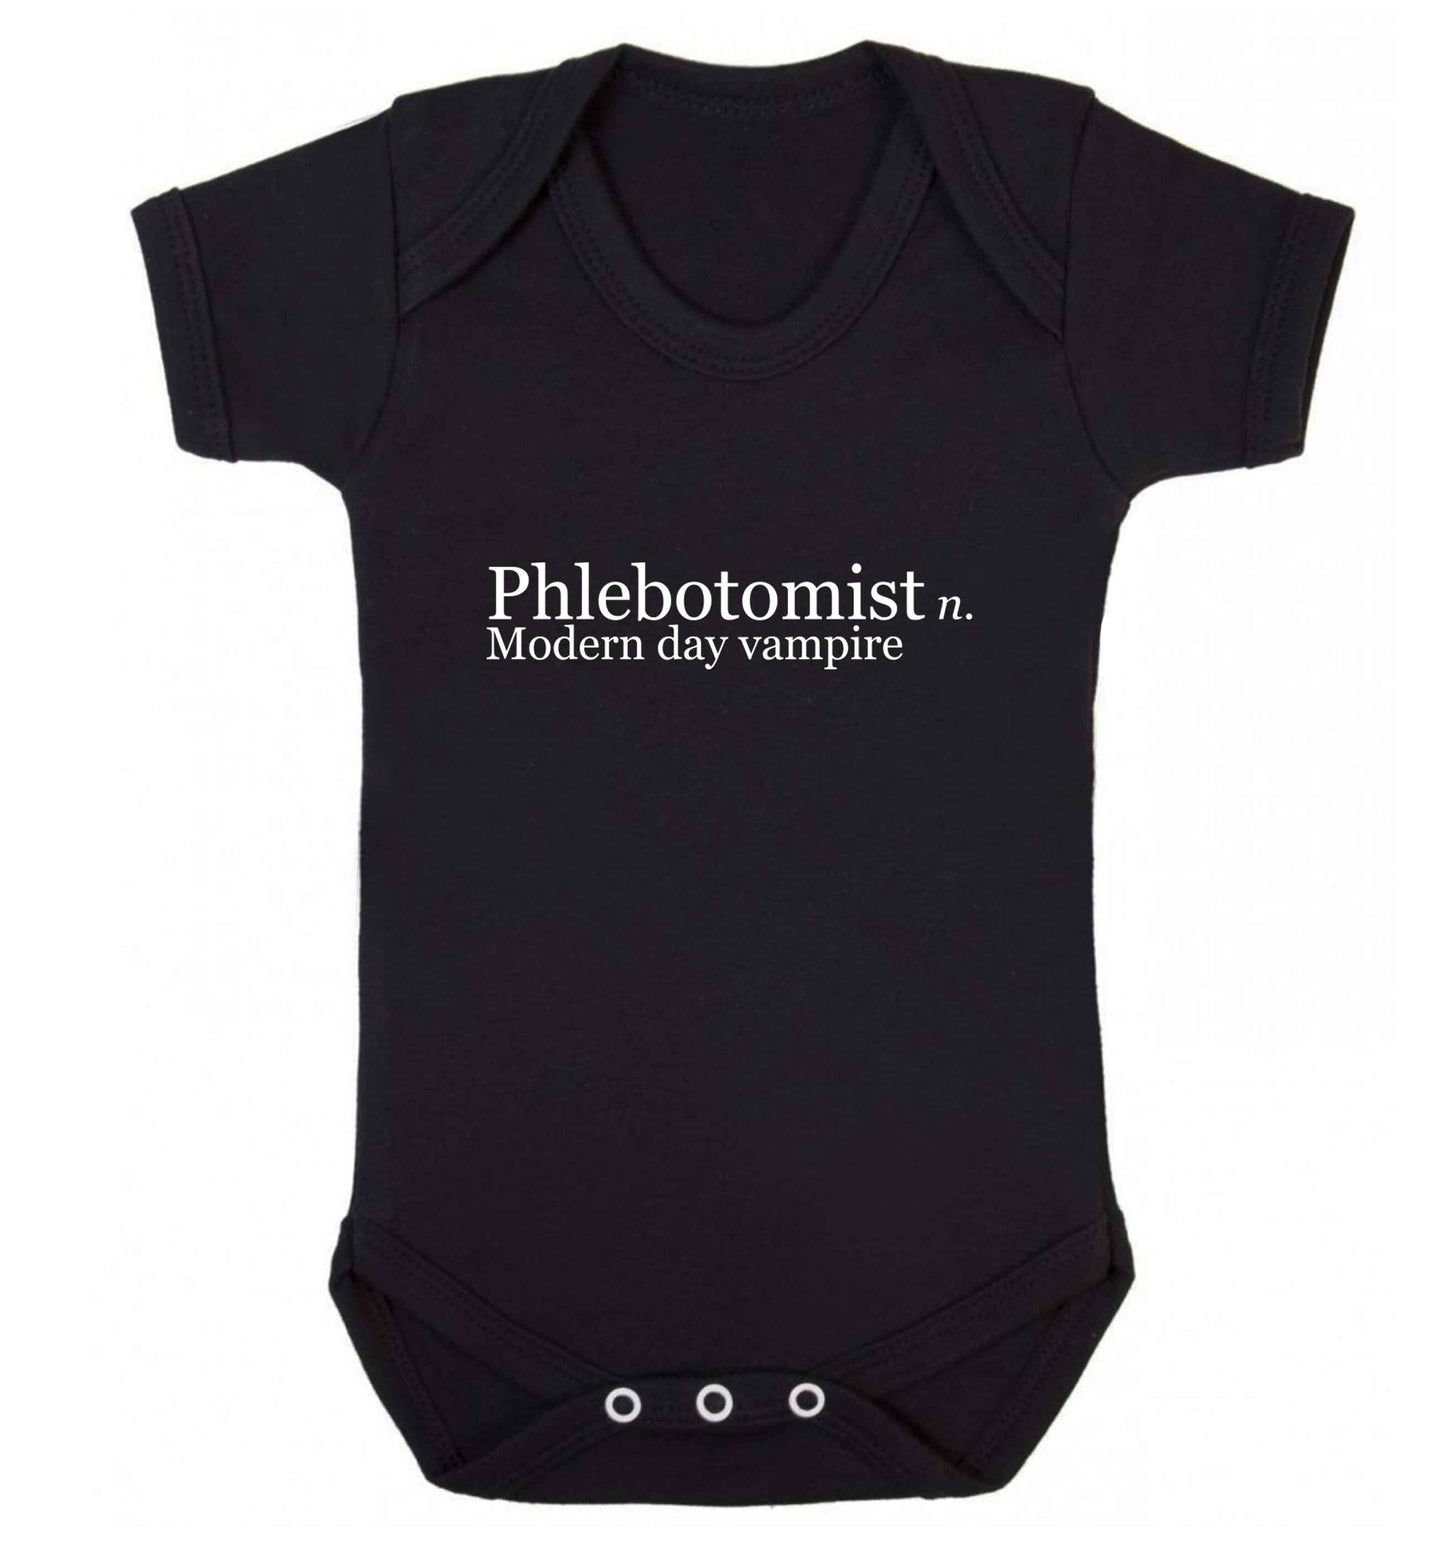 Phlebotomist - Modern day vampire baby vest black 18-24 months